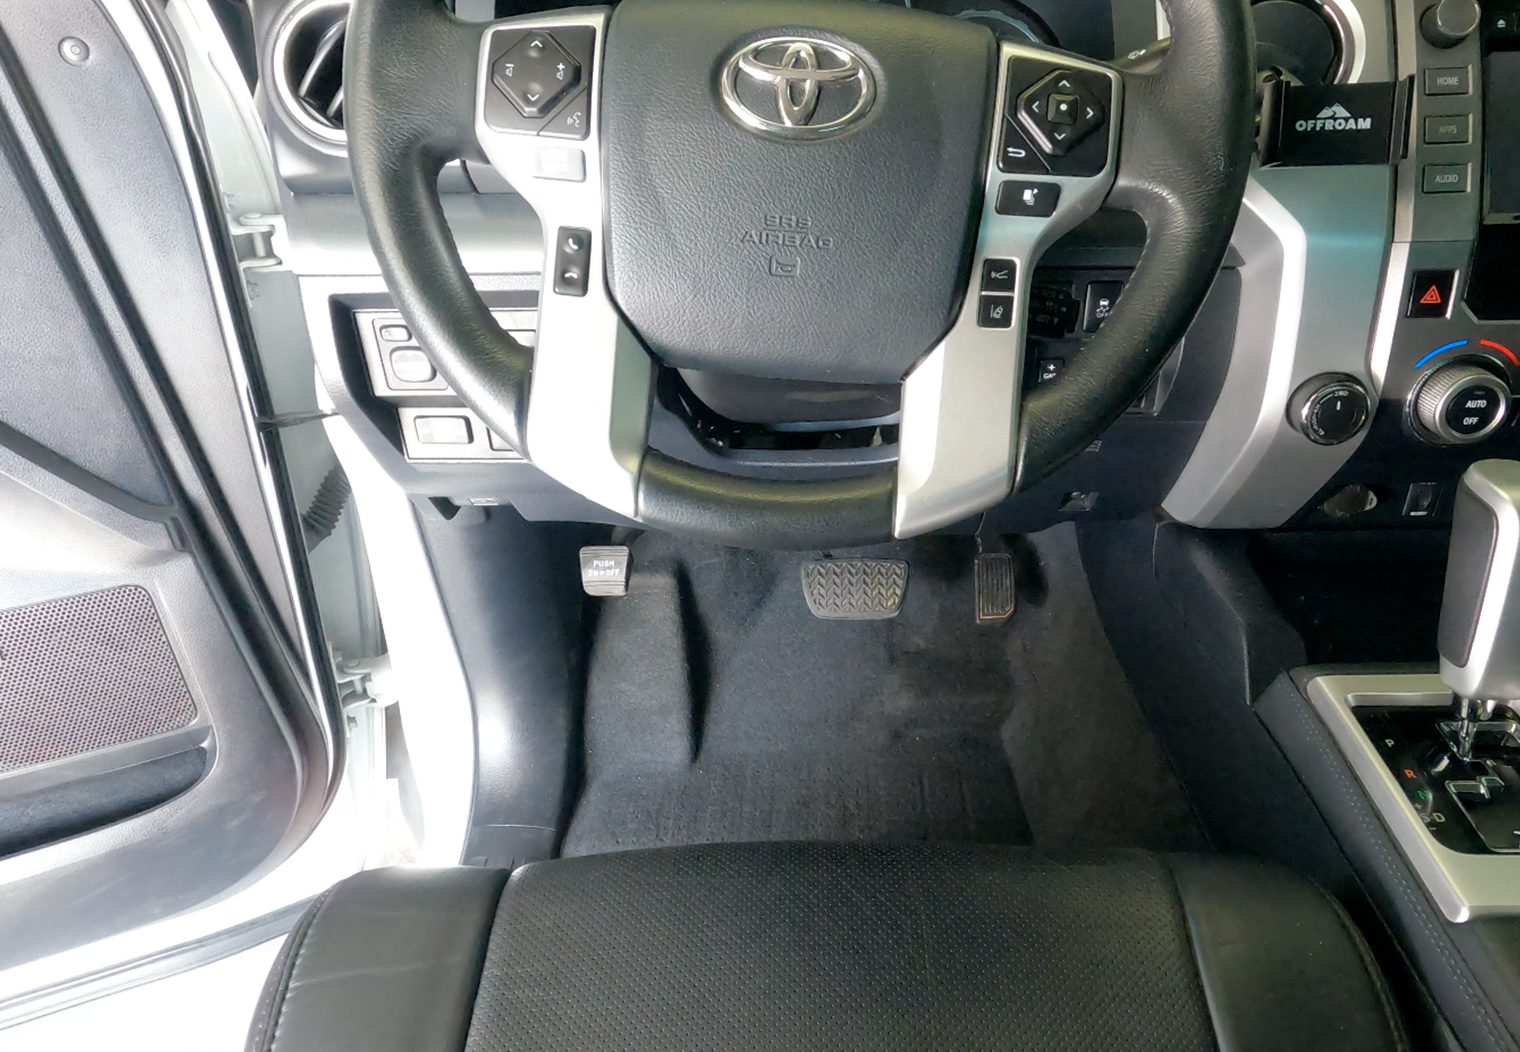 Toyota Tundra Dash Panels Driver Side